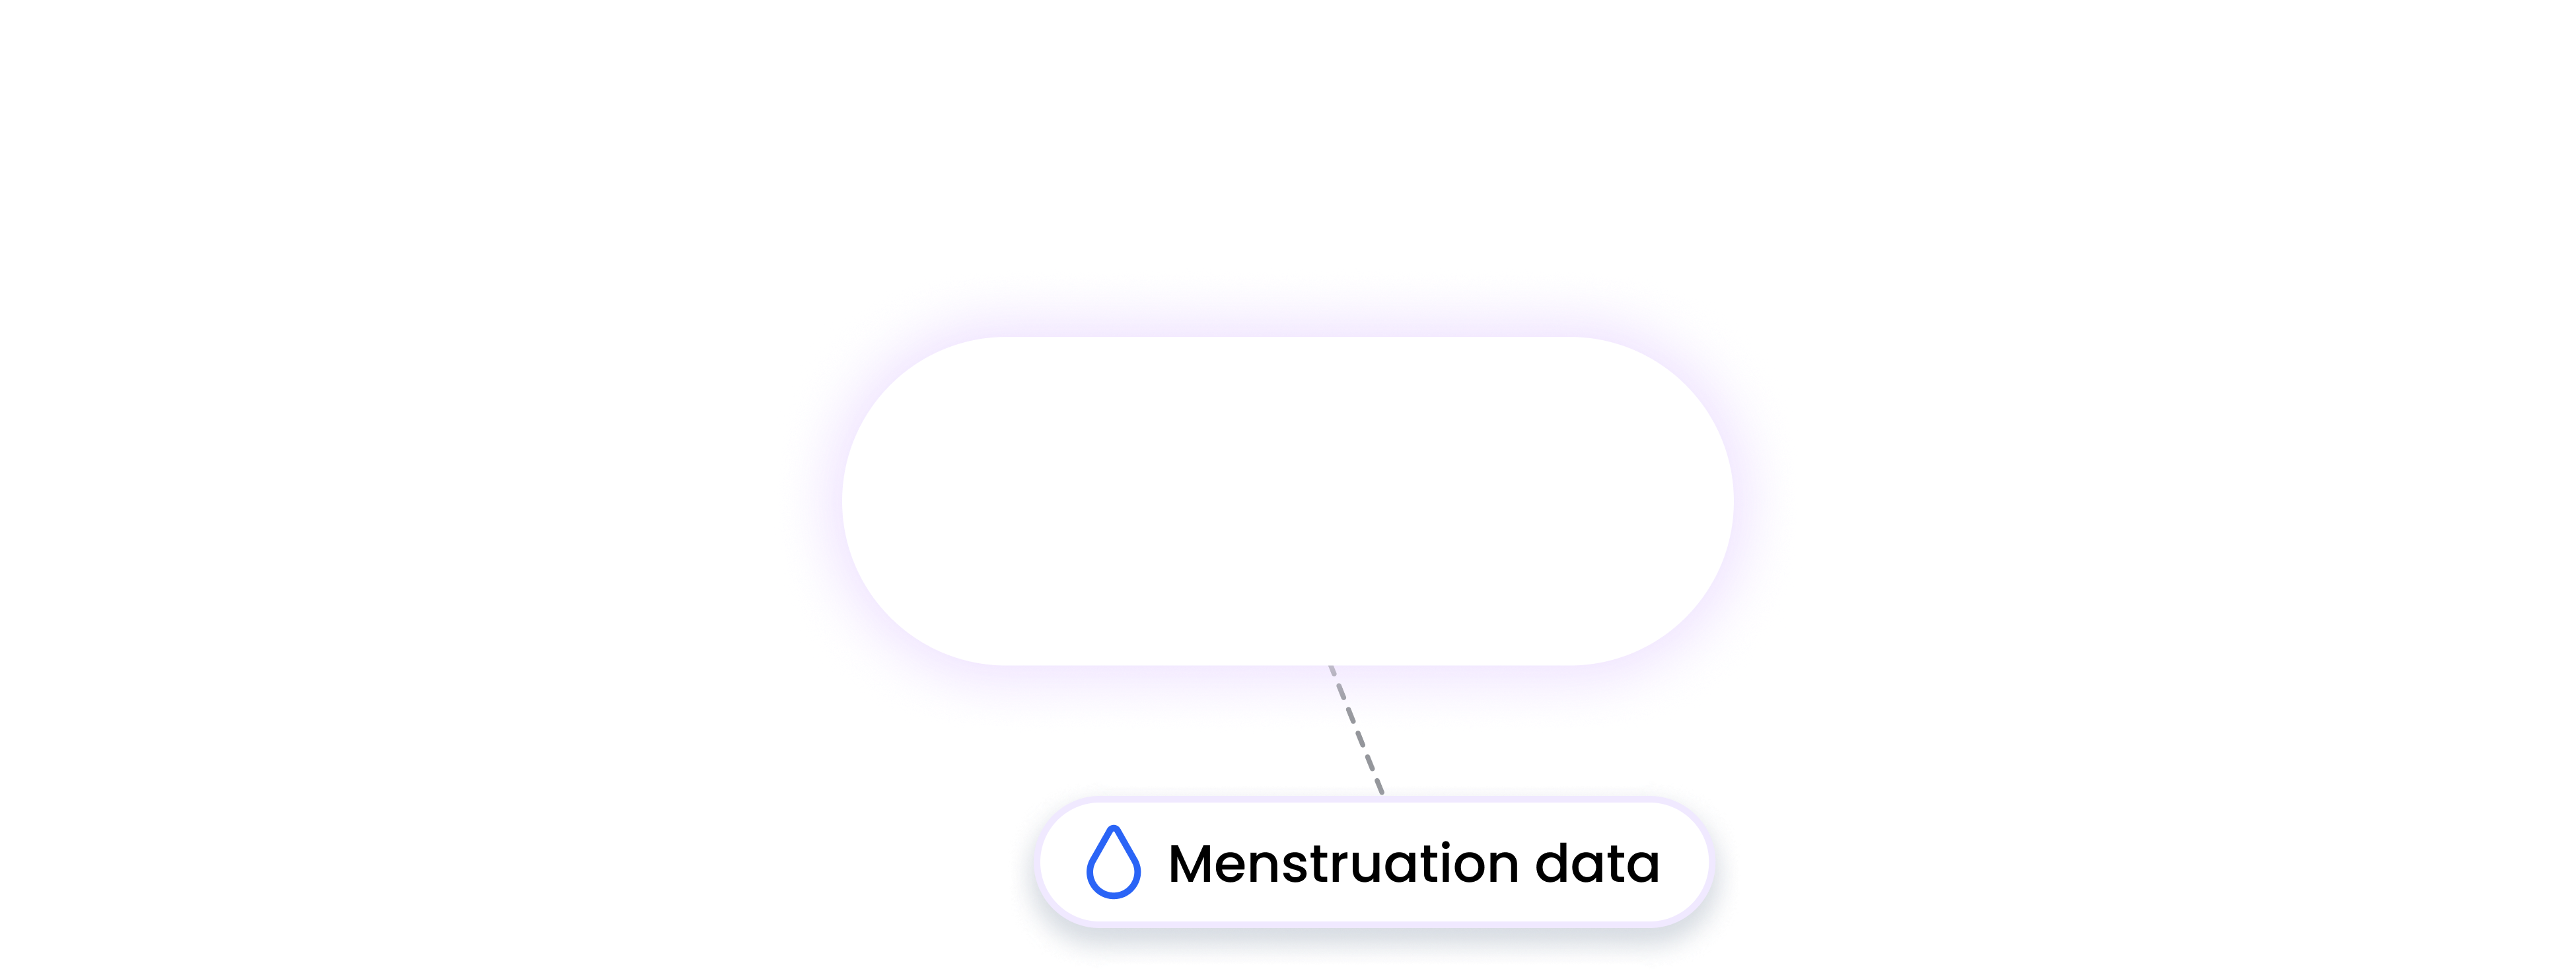 biostrap integration MENSTRUATION data